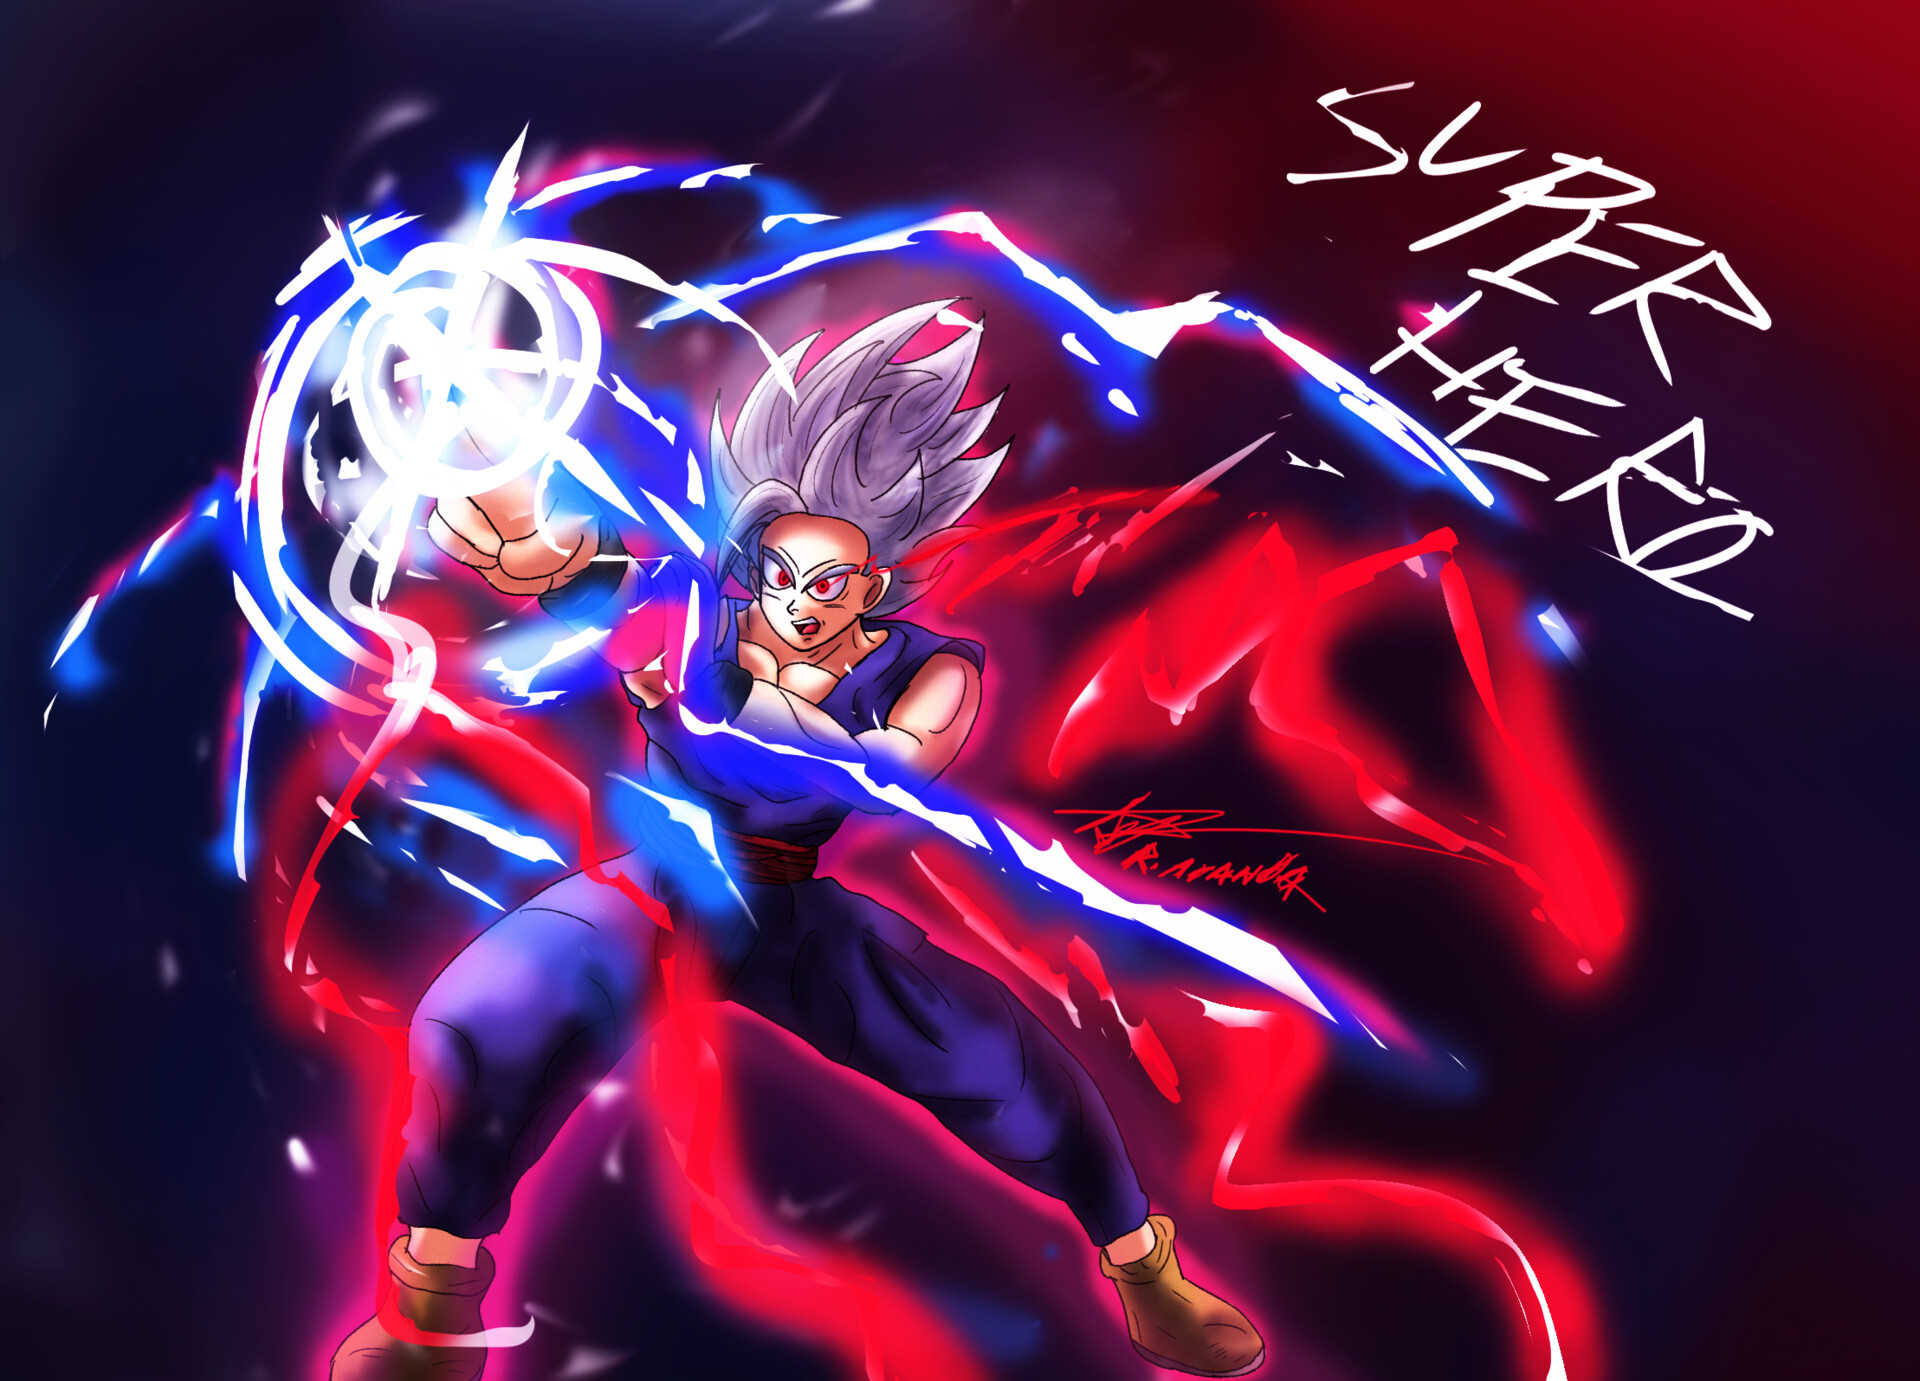 ArtStation - SON GOHAN - Dragon Ball Super [Super Hero]